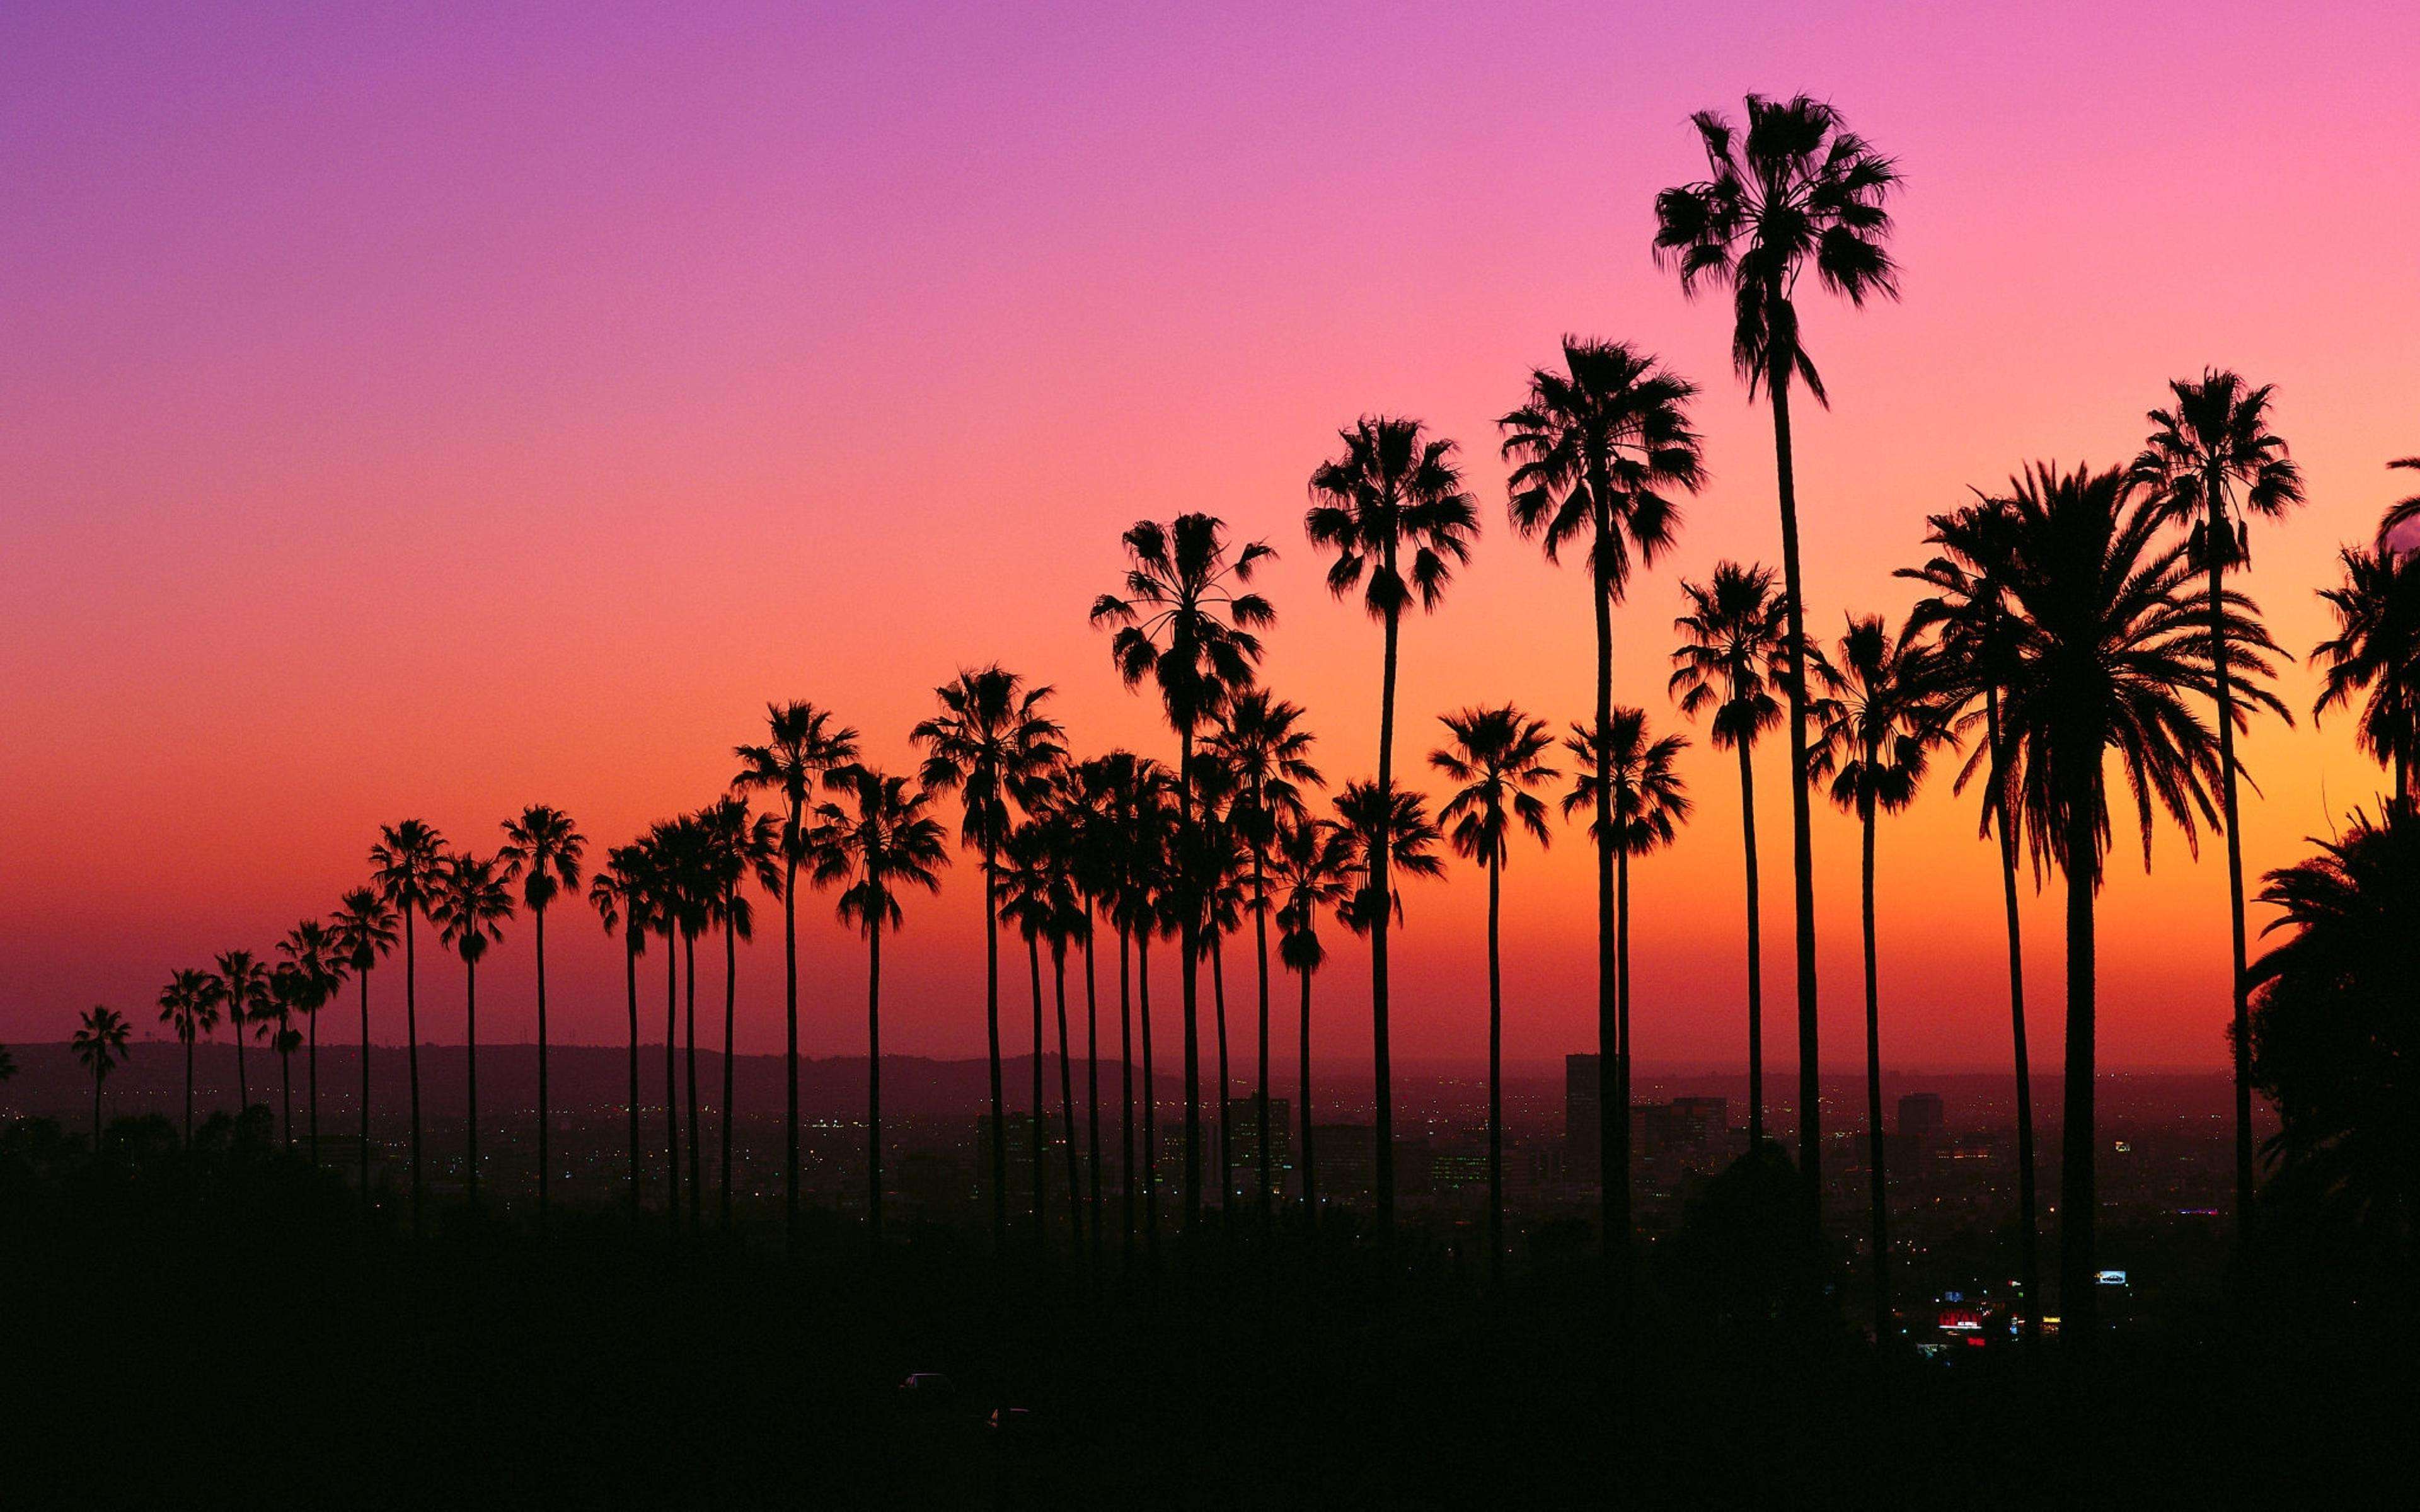 70+ Free Los Angeles Skyline & Los Angeles Images - Pixabay